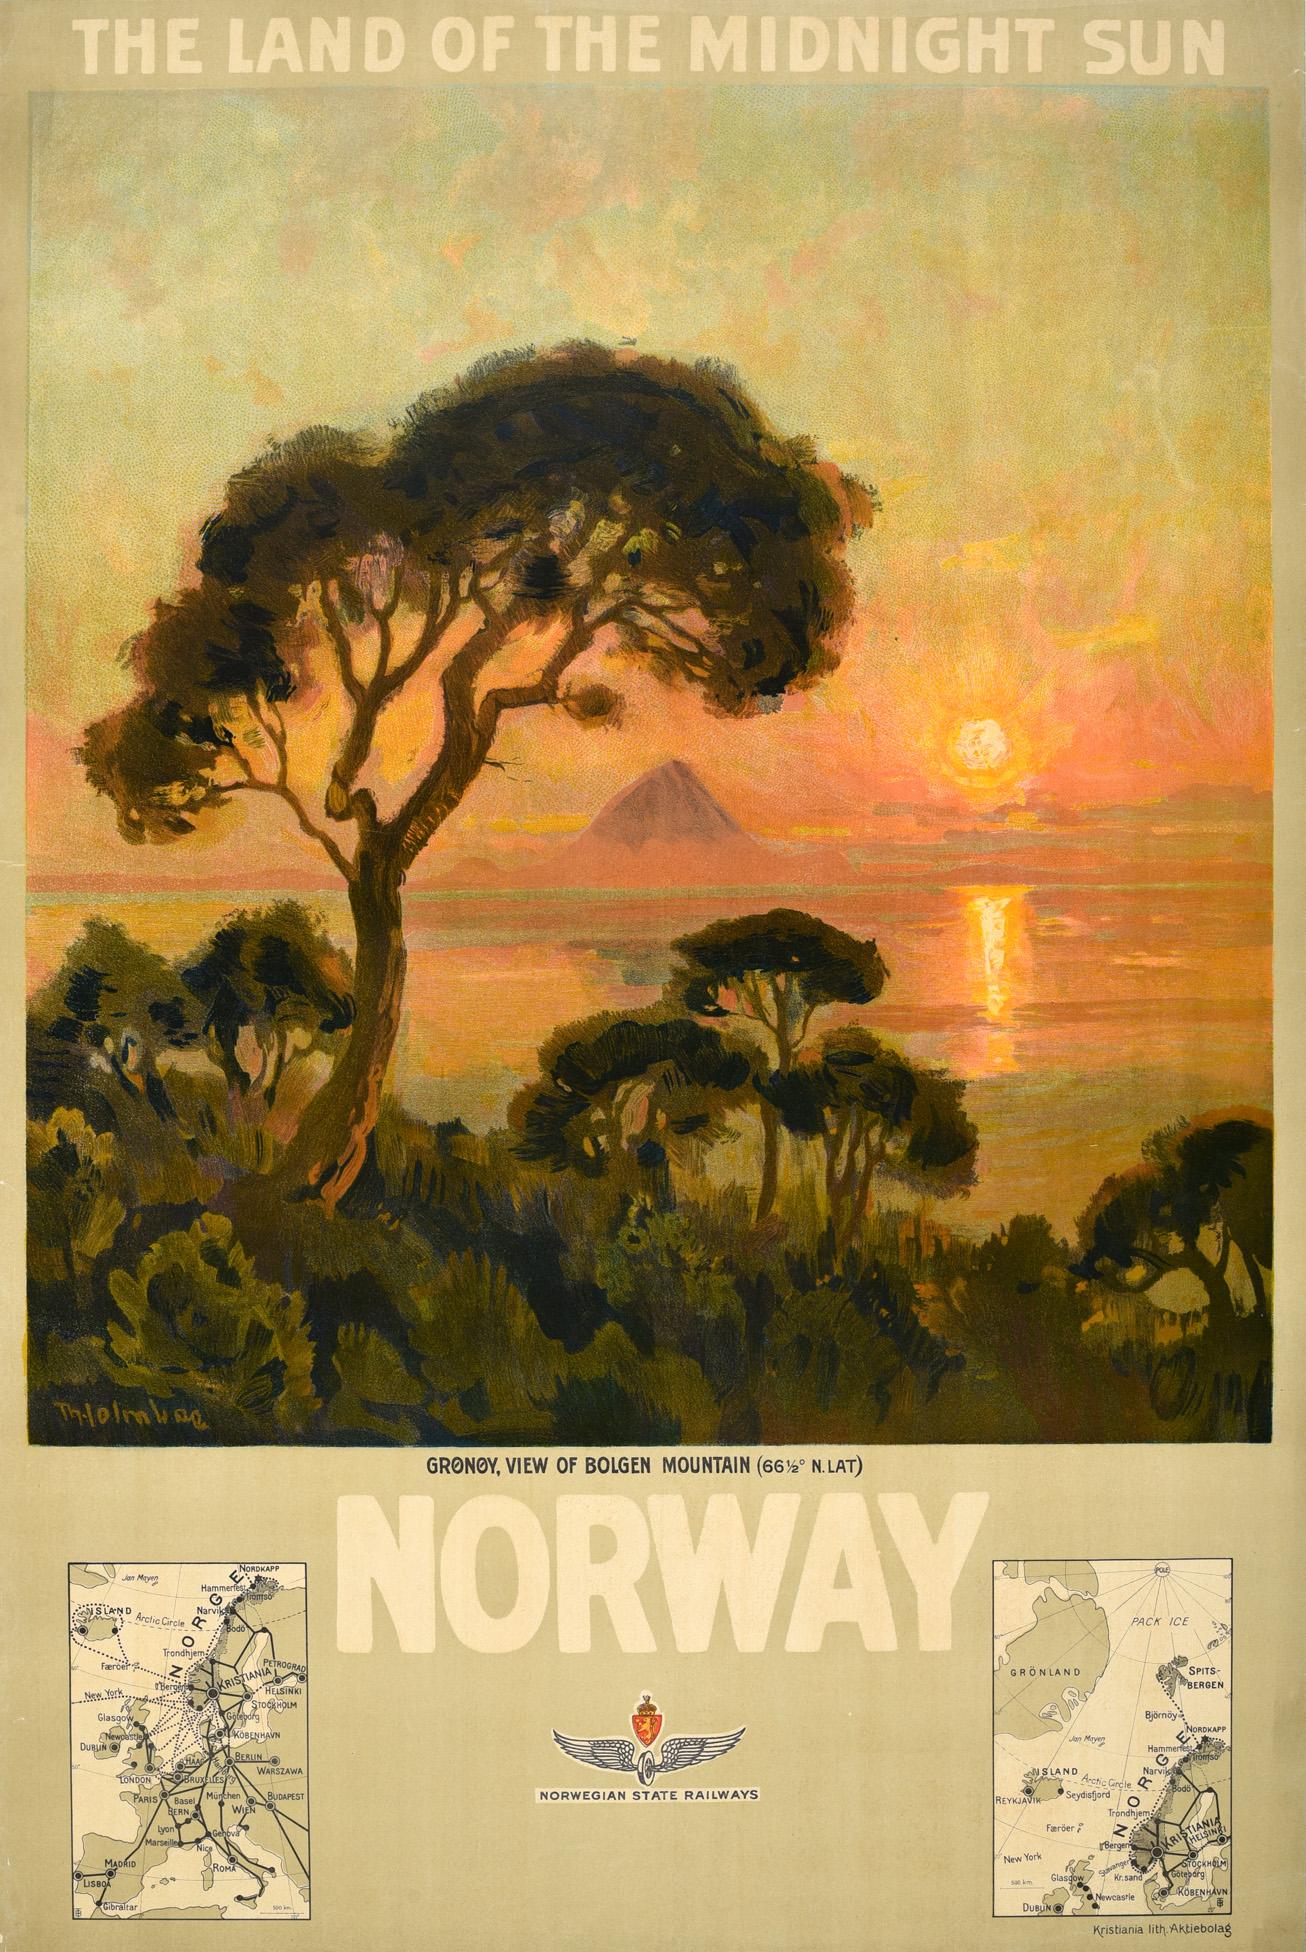 Thorolf Holmboe Print - Original Antique Poster Midnight Sun Norway Travel Gronoy Bolgen Mountain View